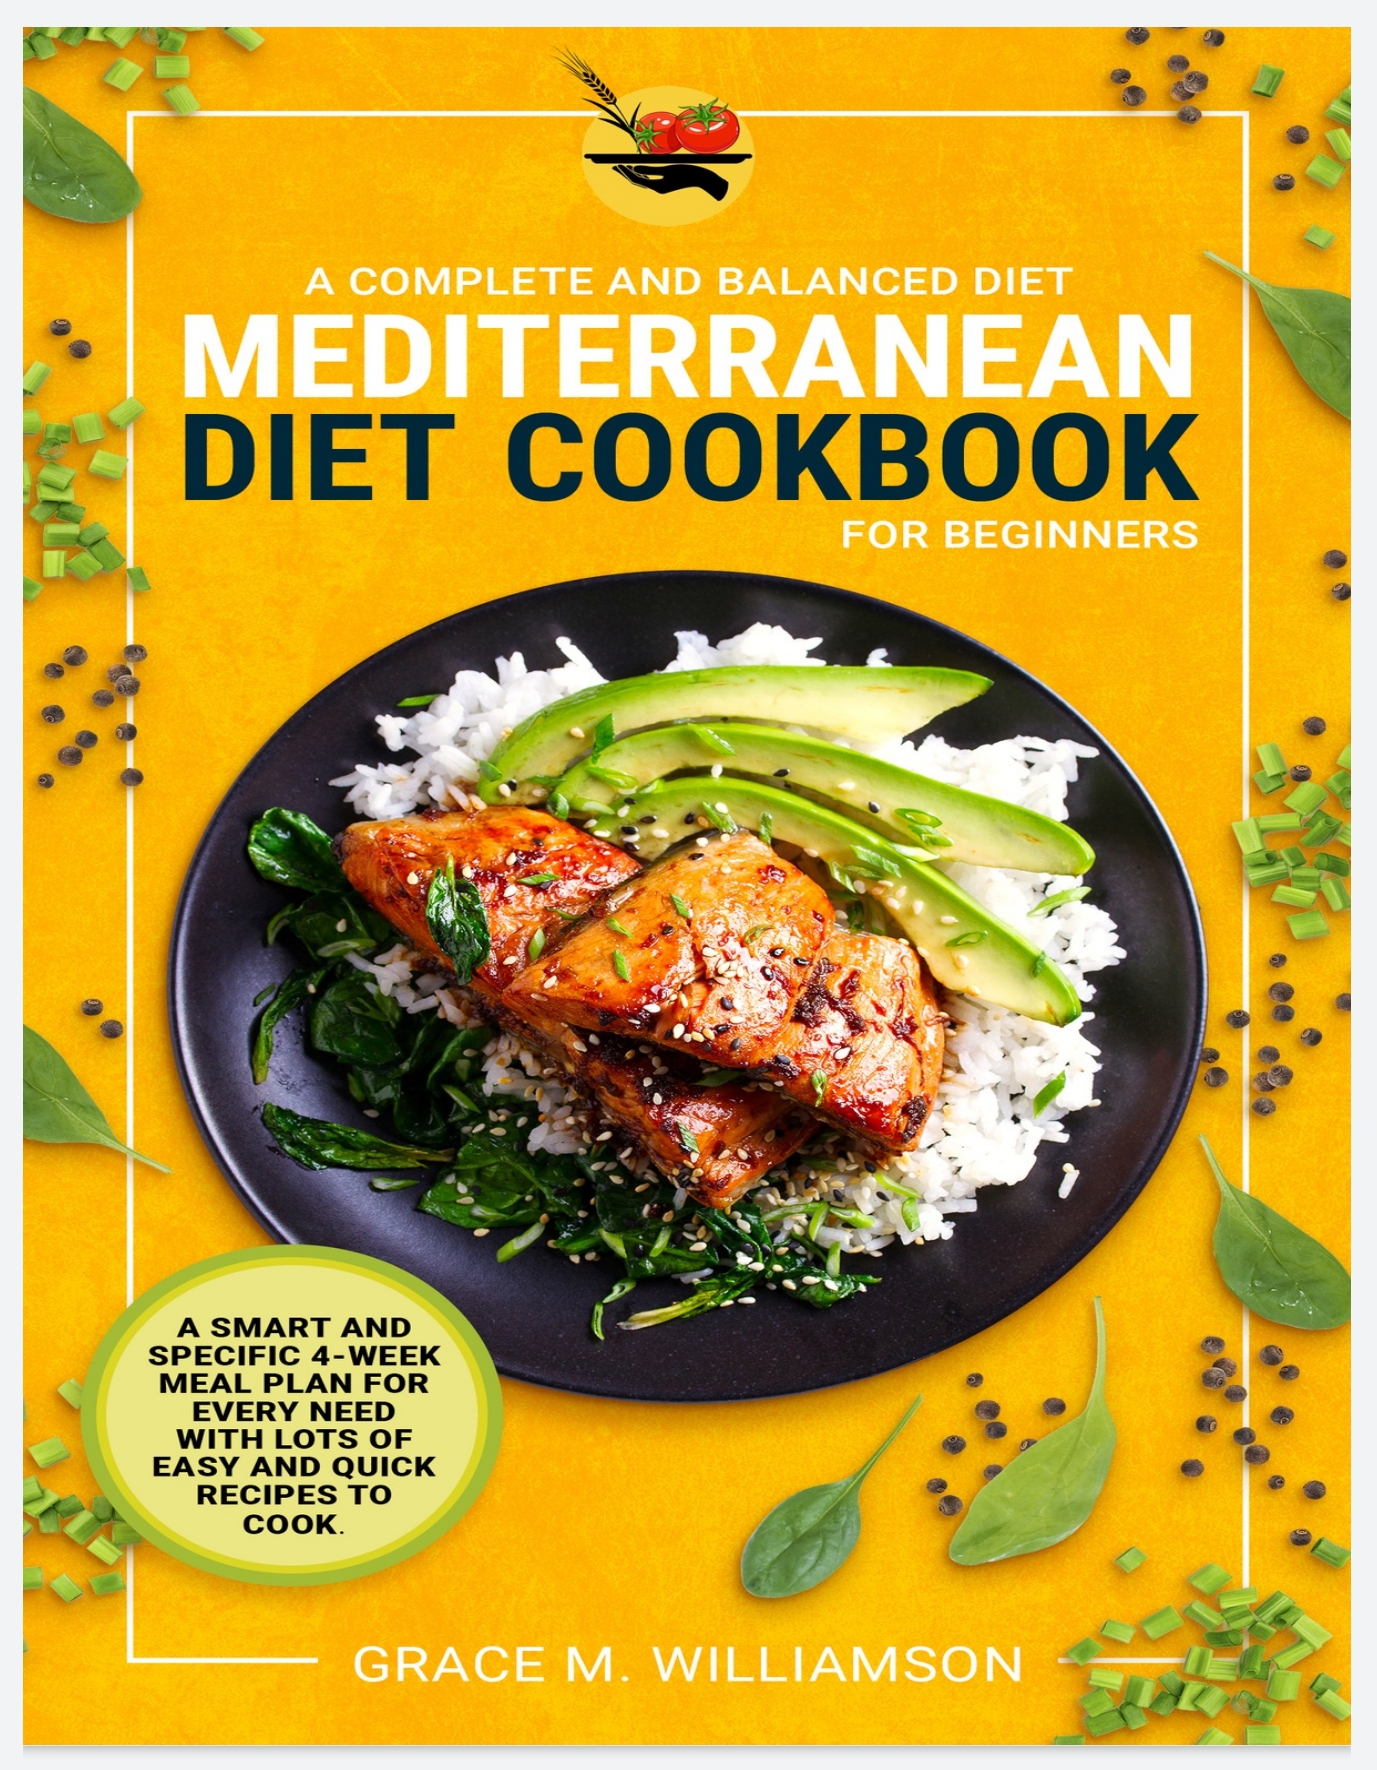 Mediterranean Diet Cookbook for Beginners FREE EBOOK PDF DOWNLOAD: A